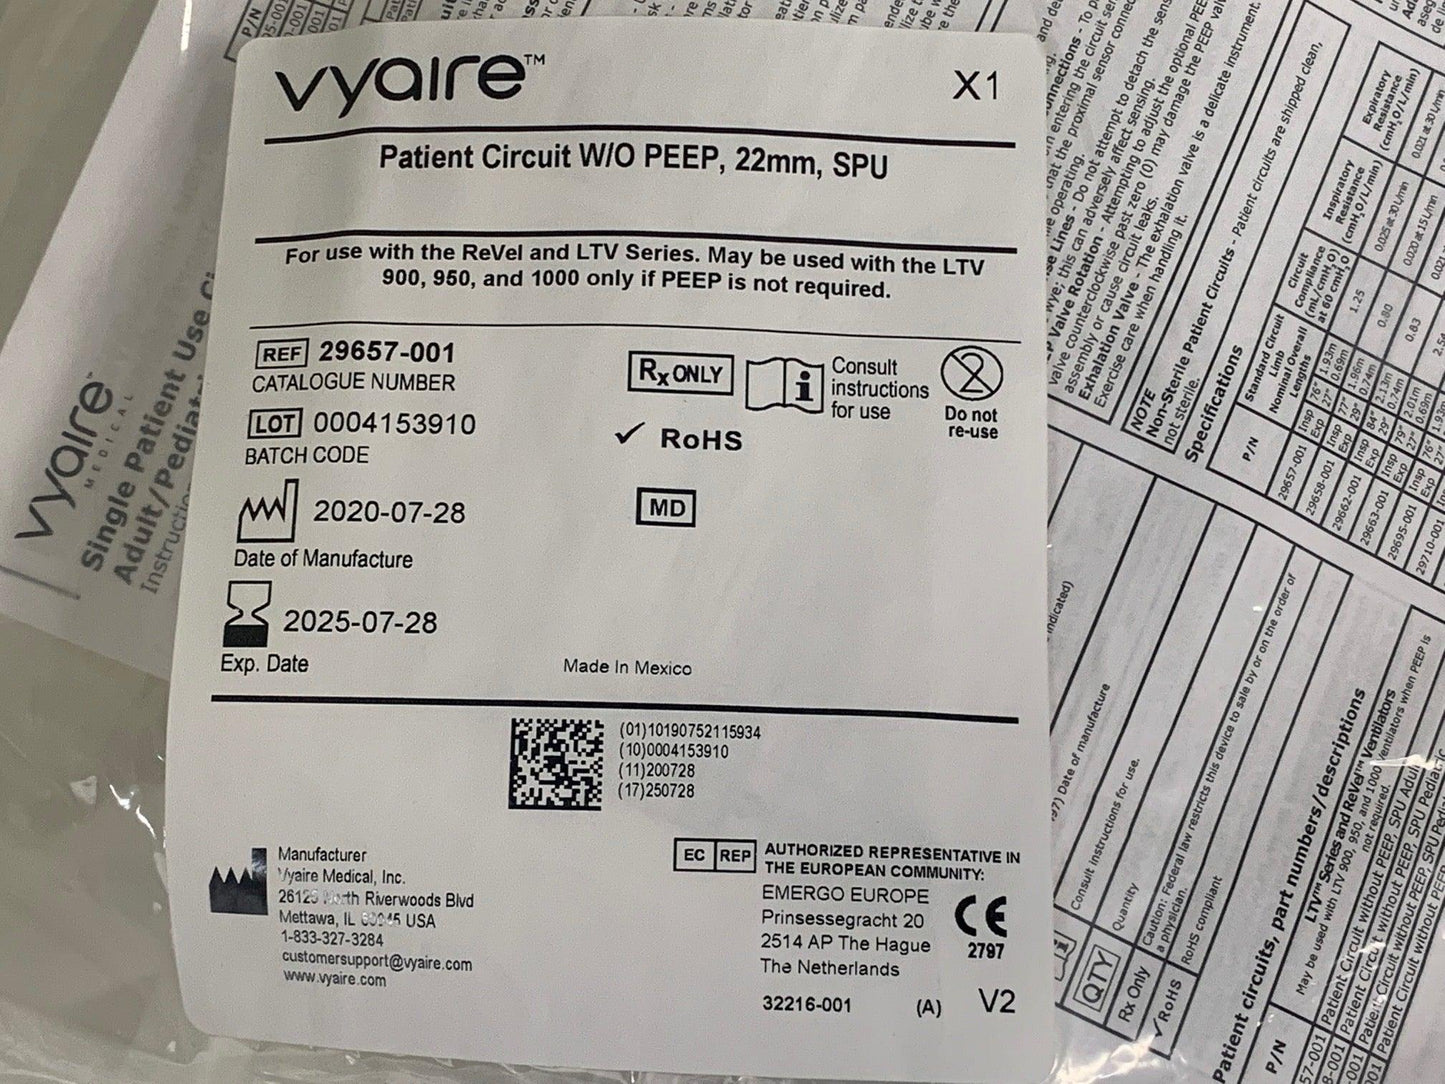 USED CareFusion Viasys LTV 1200 Medical Ventilator 18888-001 with Warranty